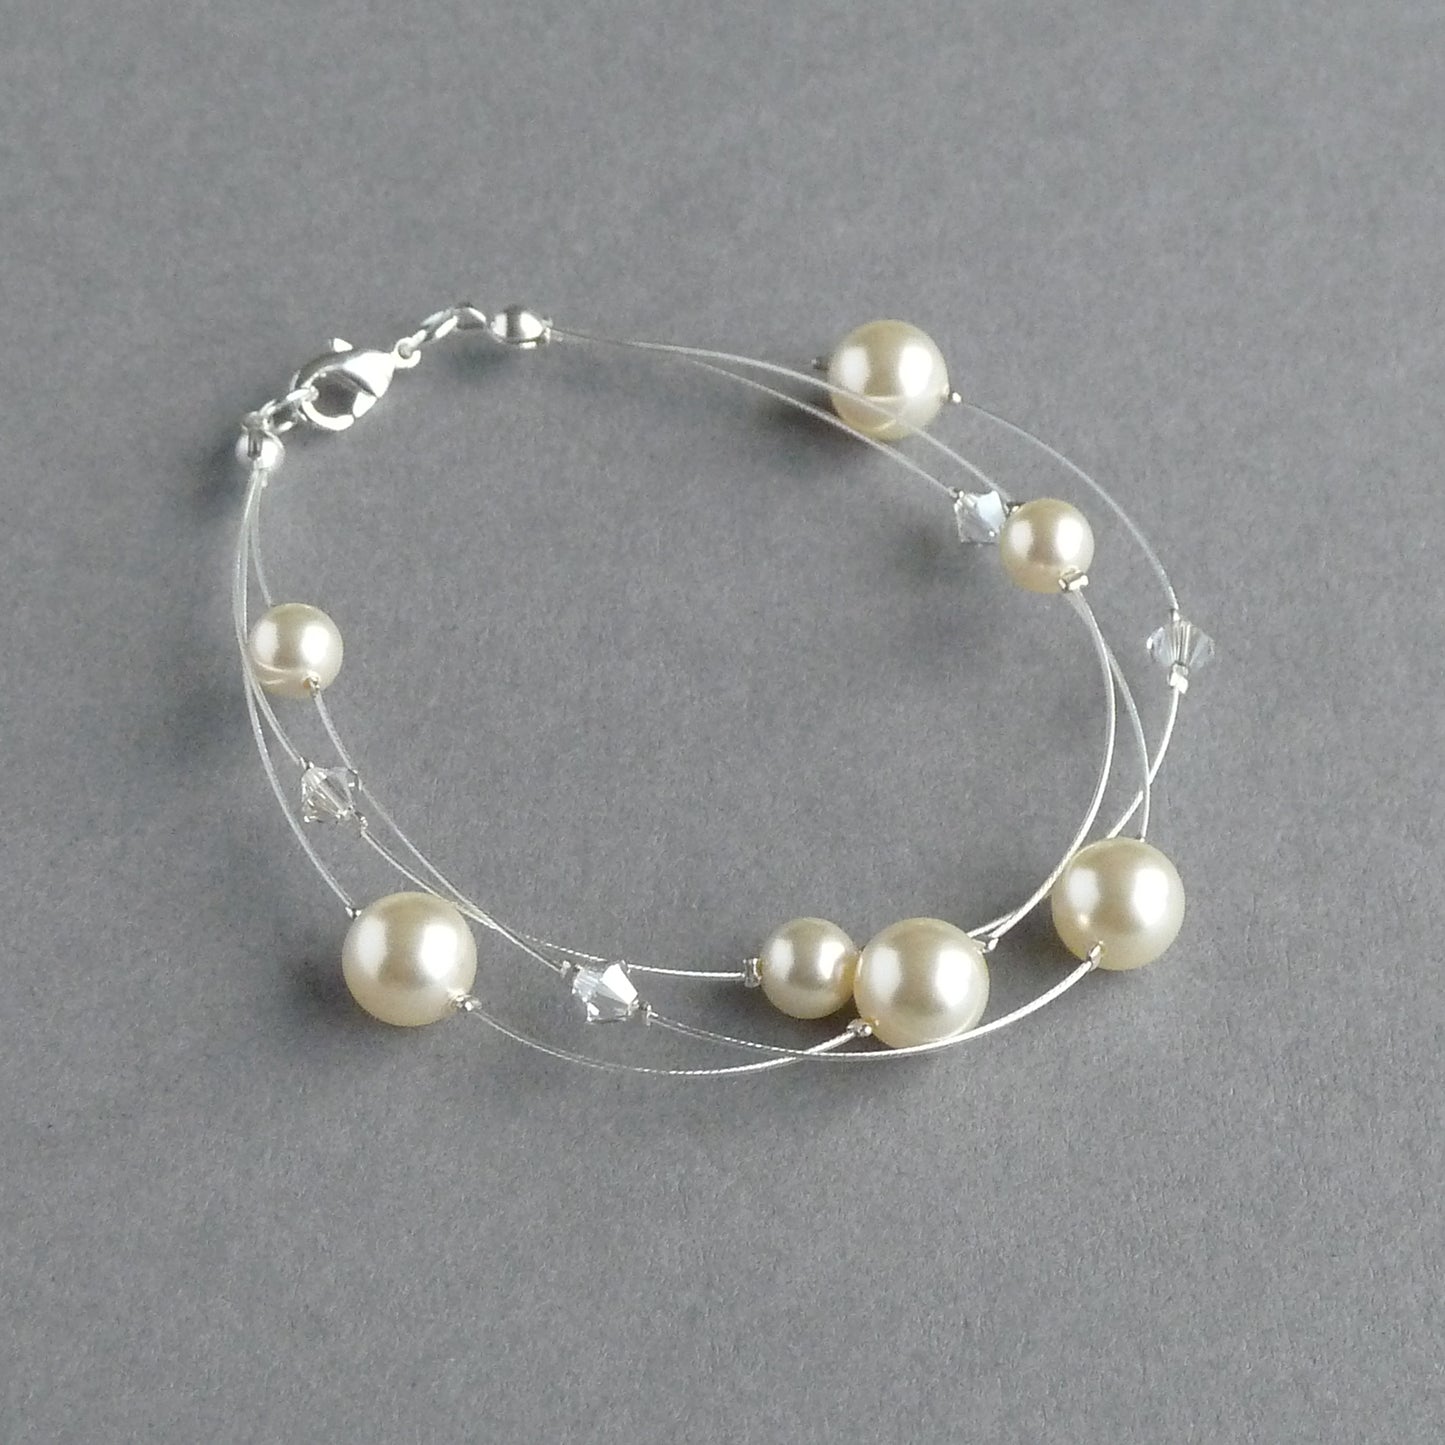 Cream floating pearl bracelet